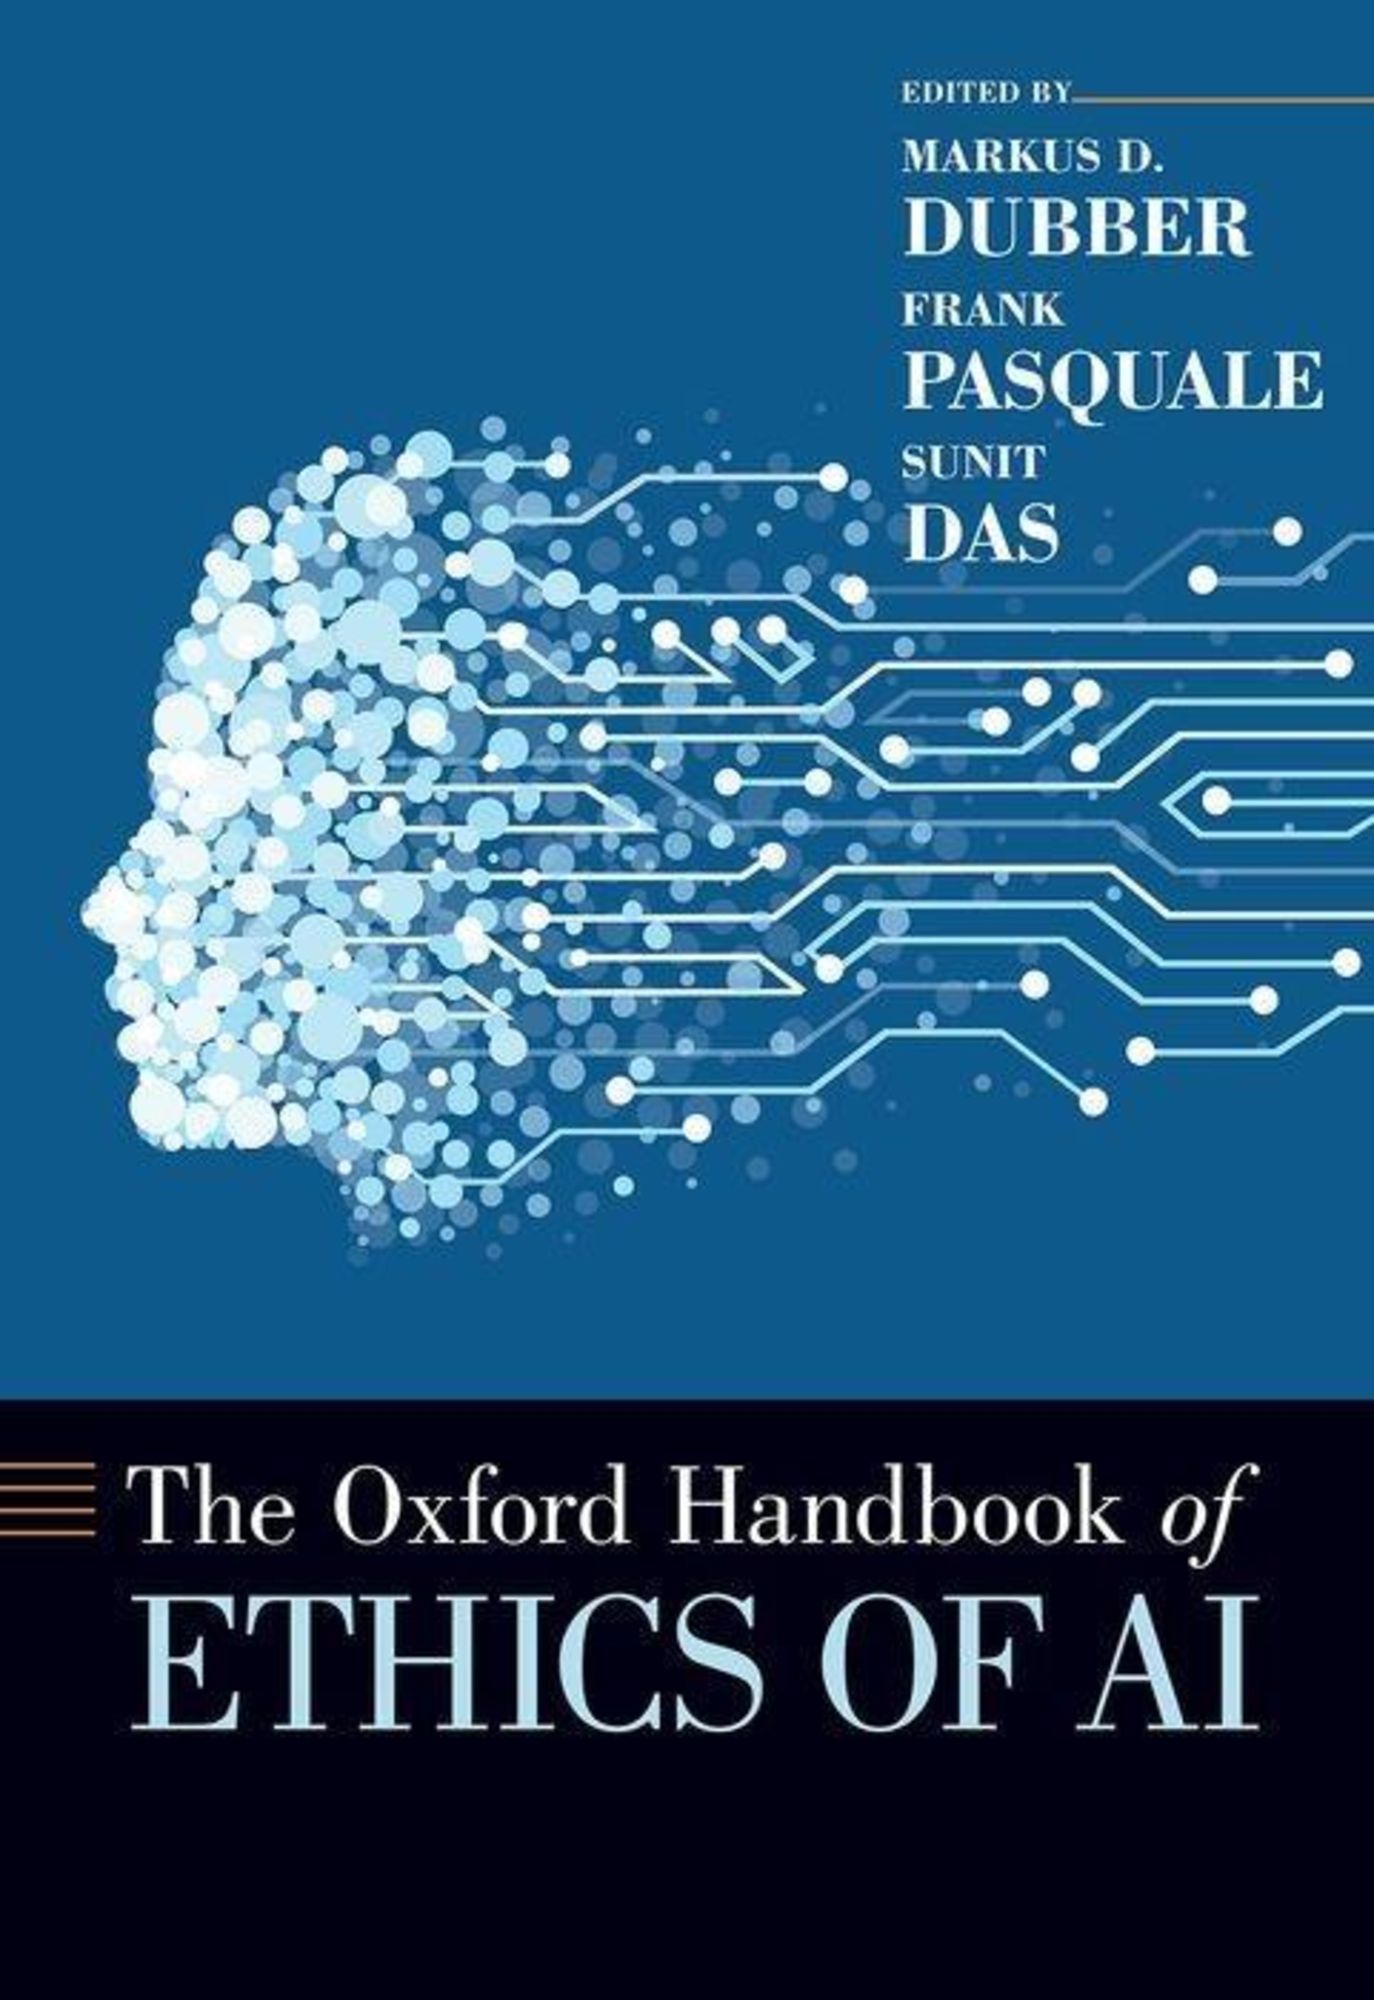 Ausgabe'　Criminology　Law　Oxford　D.　Ethics　AI'　'Markus　of　'Gebundene　von　Handbook　Dubber'　of　The　(Professor　of　'978-0-19-006739-7'